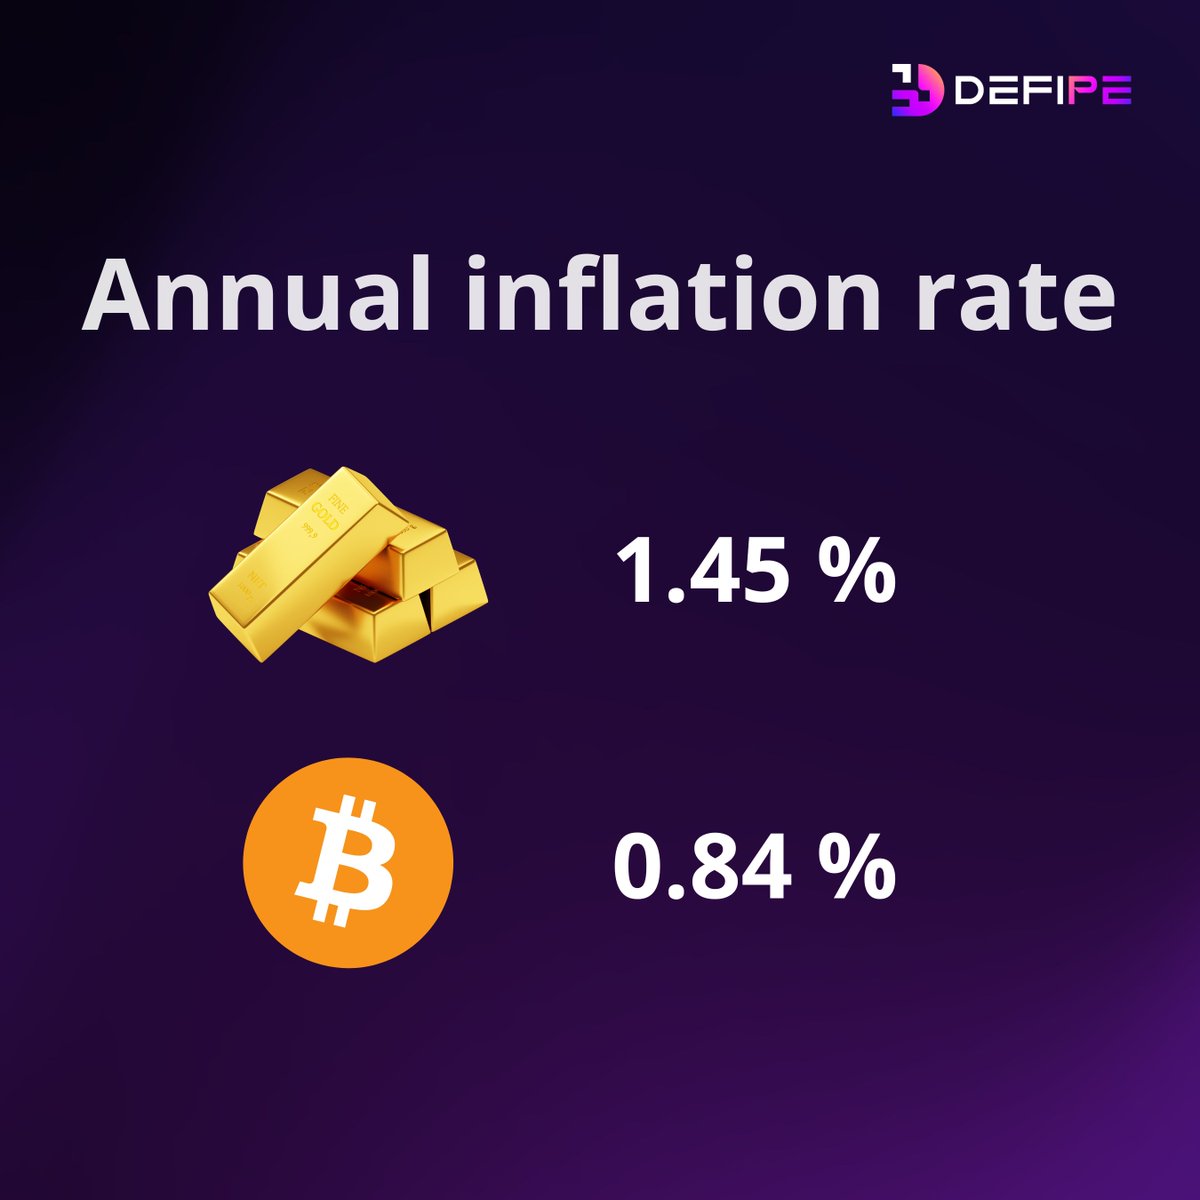 Gold VS Bitcoin

#defipeio #defi #cryprotrading #cryptomarket #cryptonewsdaily #ethereum #btc #coin #coincollecting #gold #inflation